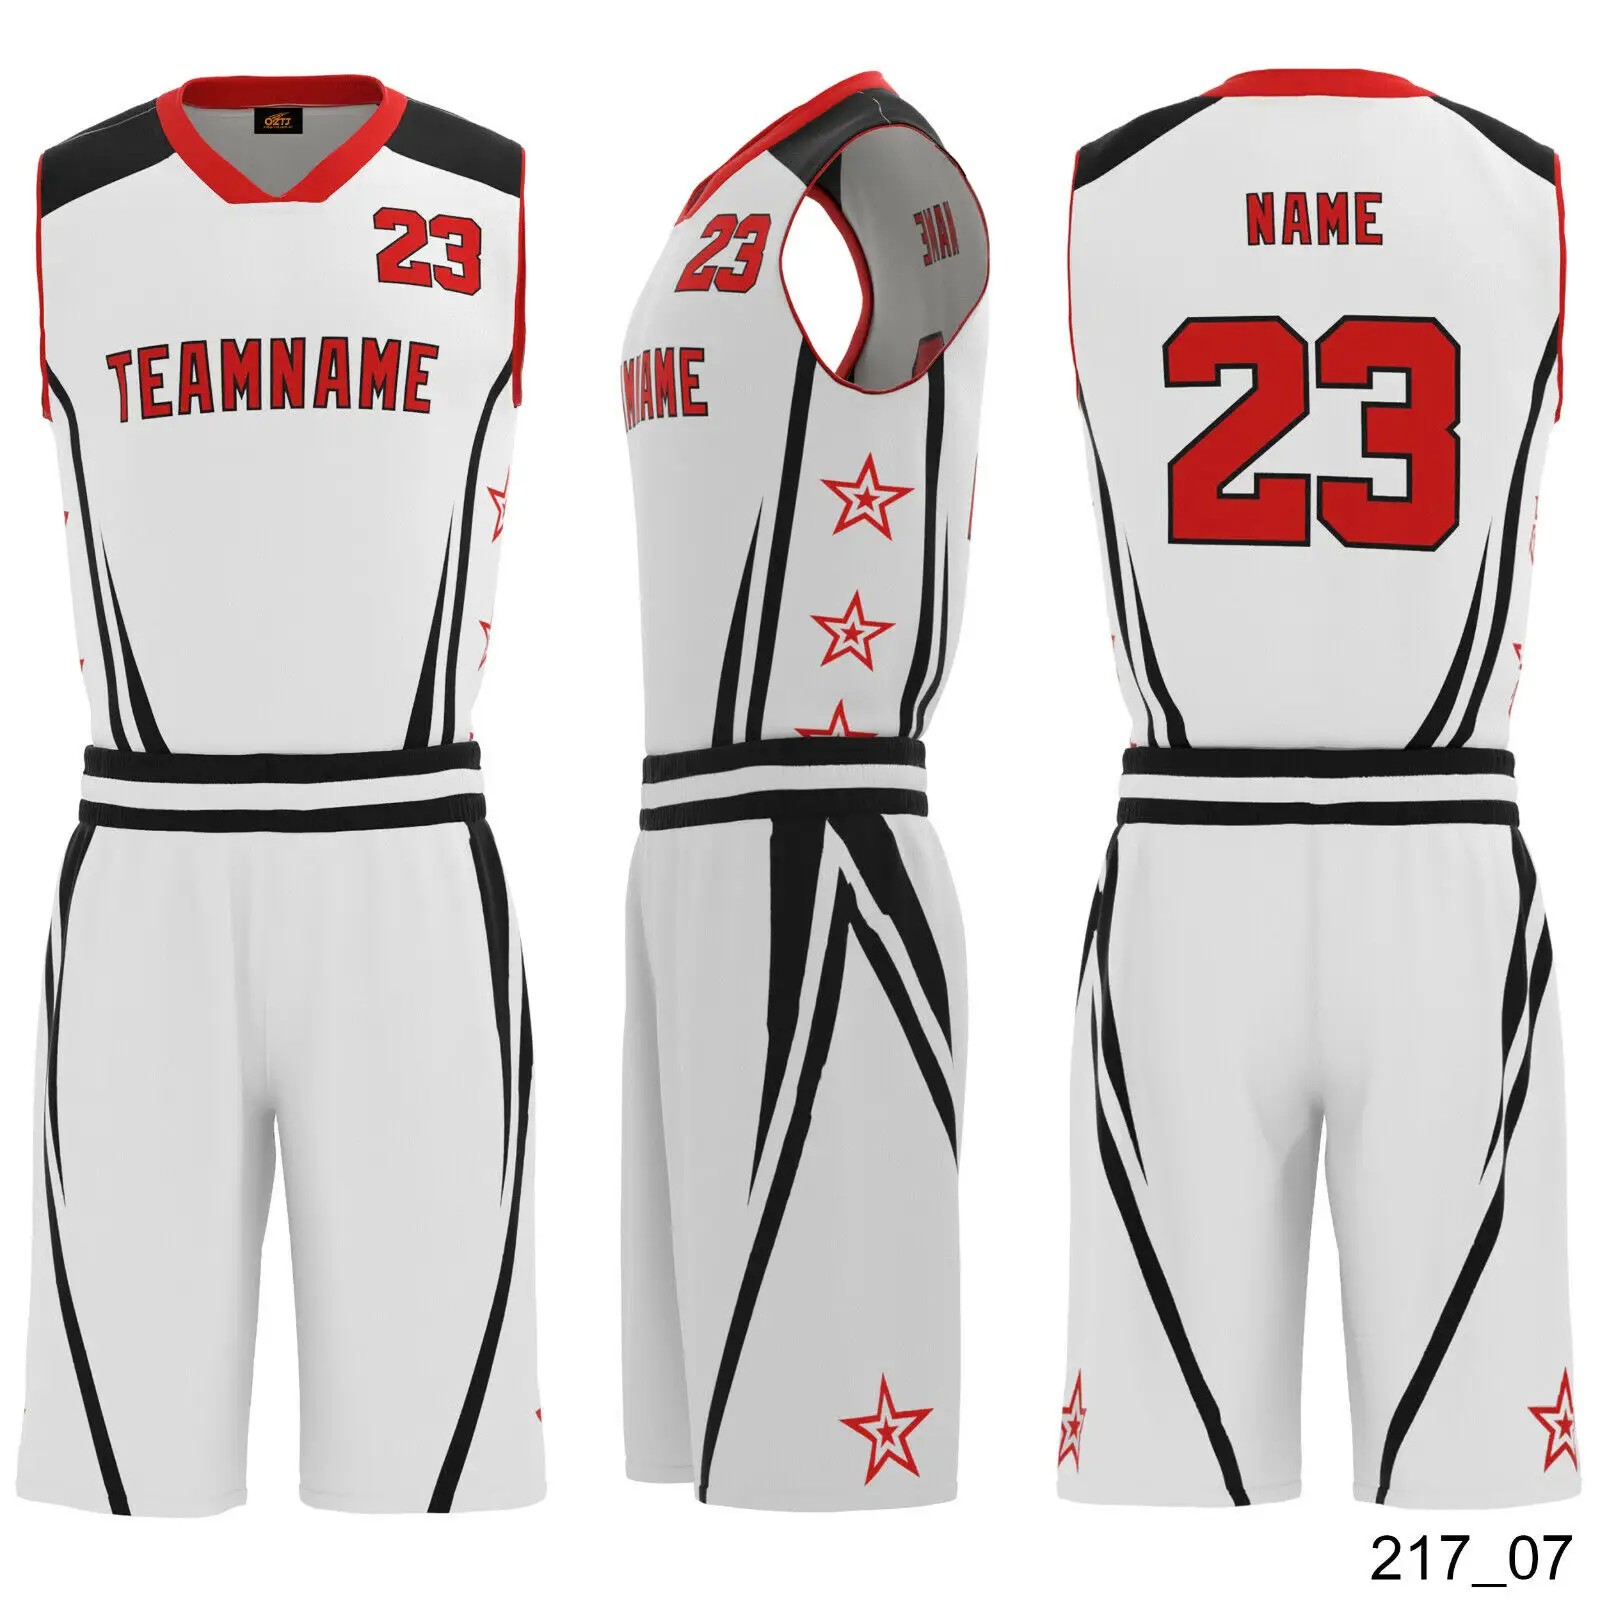 New Jersey And Shorts Custom Men s Basketball Uniform Jersey Dresses For Basket Ball Uniform team wear low price